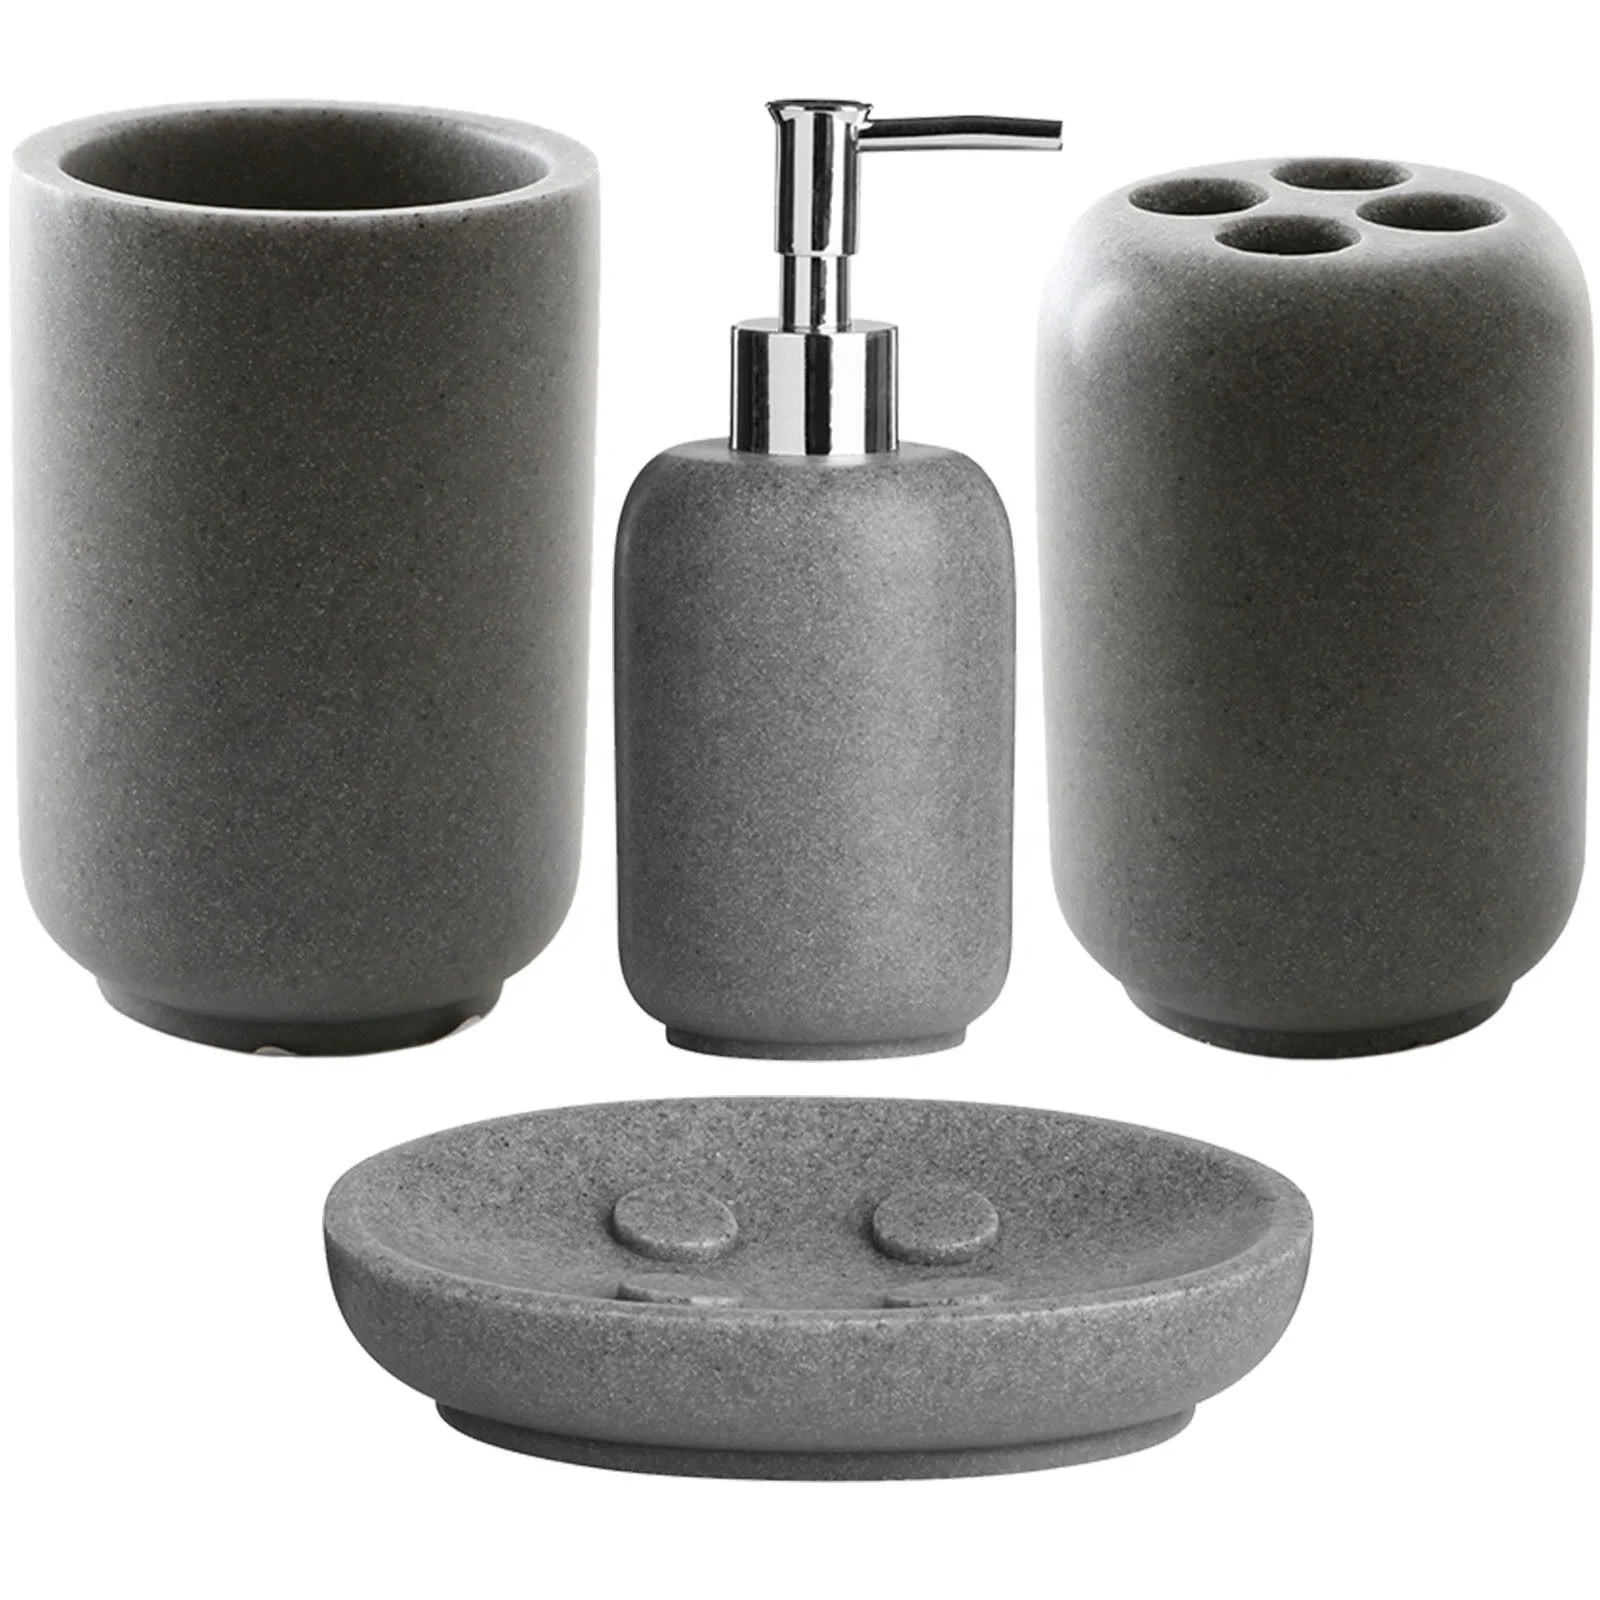 Cheap Grey Sandstone Resin Bath Set Home Accessories Bathroom Soap Sets